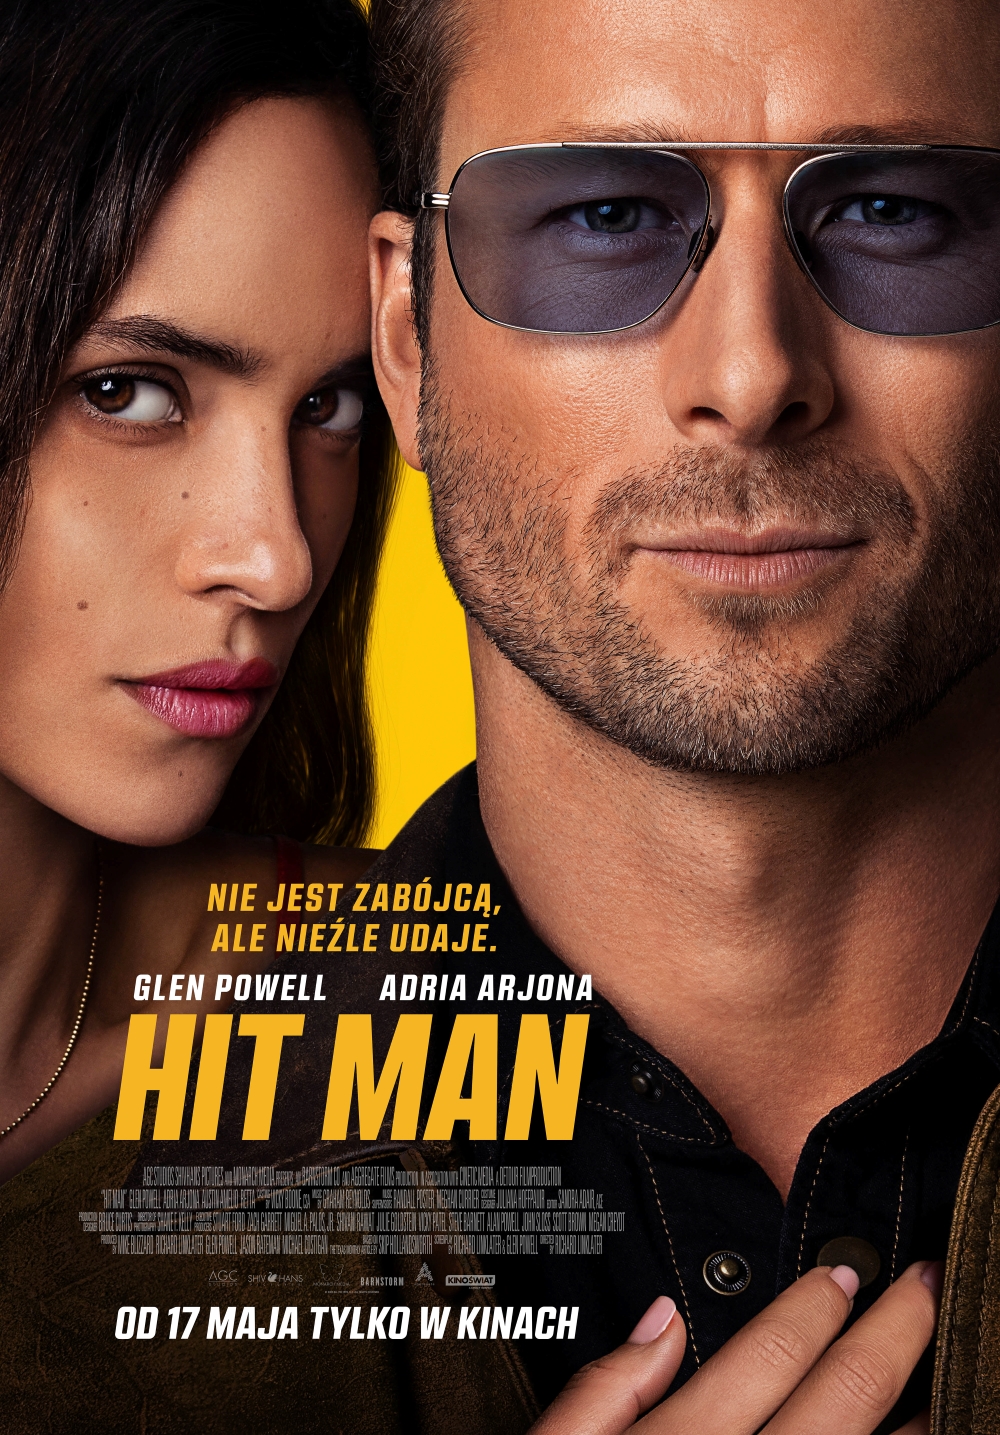 Plakat_HIT_MAN_Kino_Swiat_maly